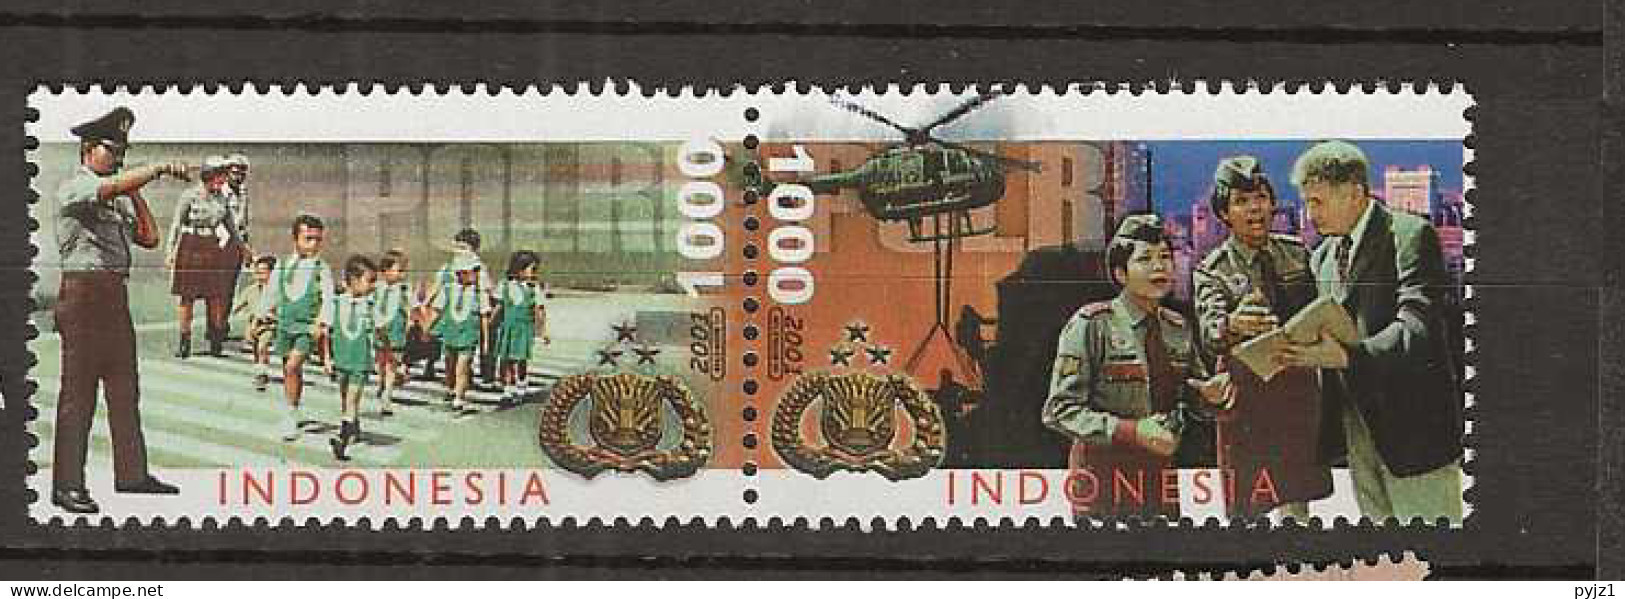 2001 MNH Indonesia ZBL 2195-96 Postfris** - Indonesië